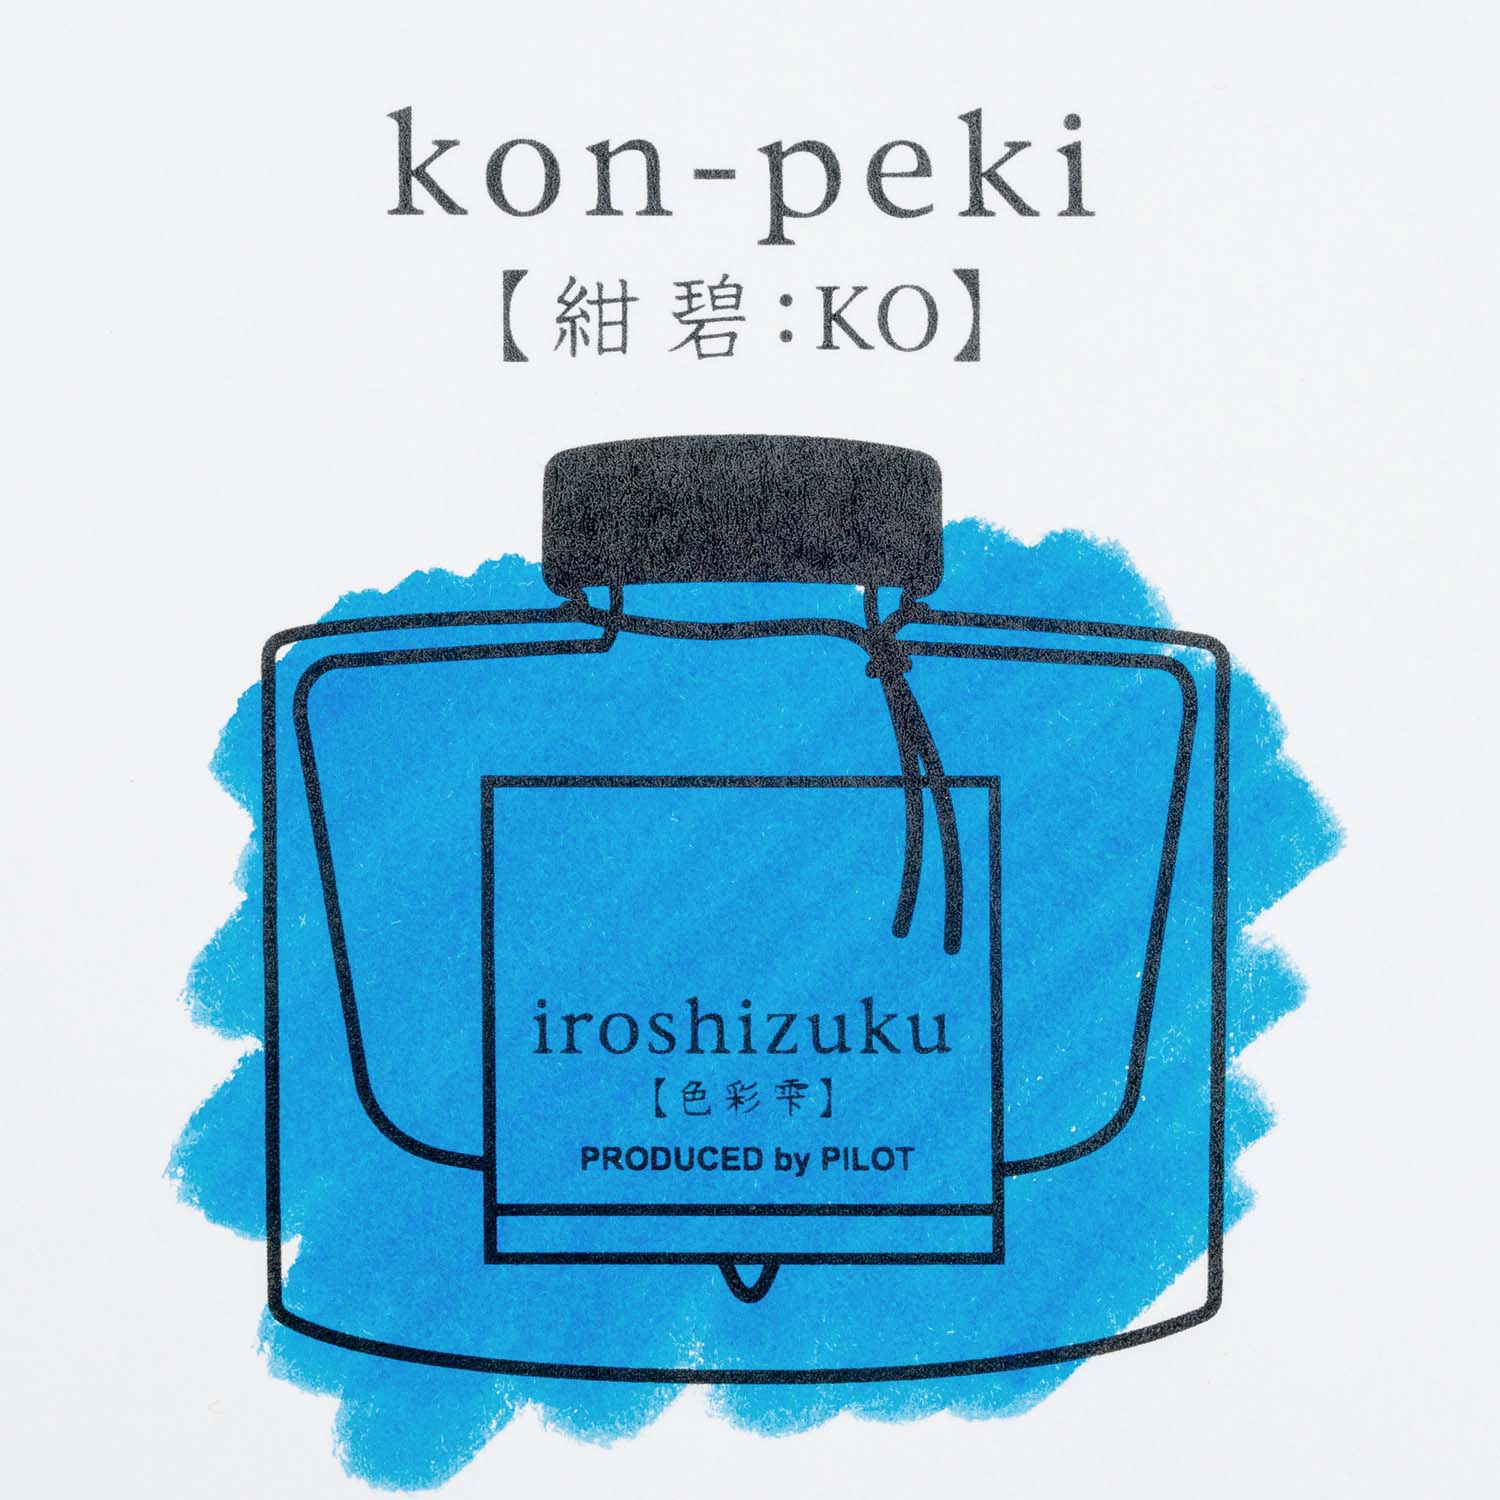 Pilot Iroshizuku Fountain Pen Ink - Kon-peki (Deep Blue) - Sample